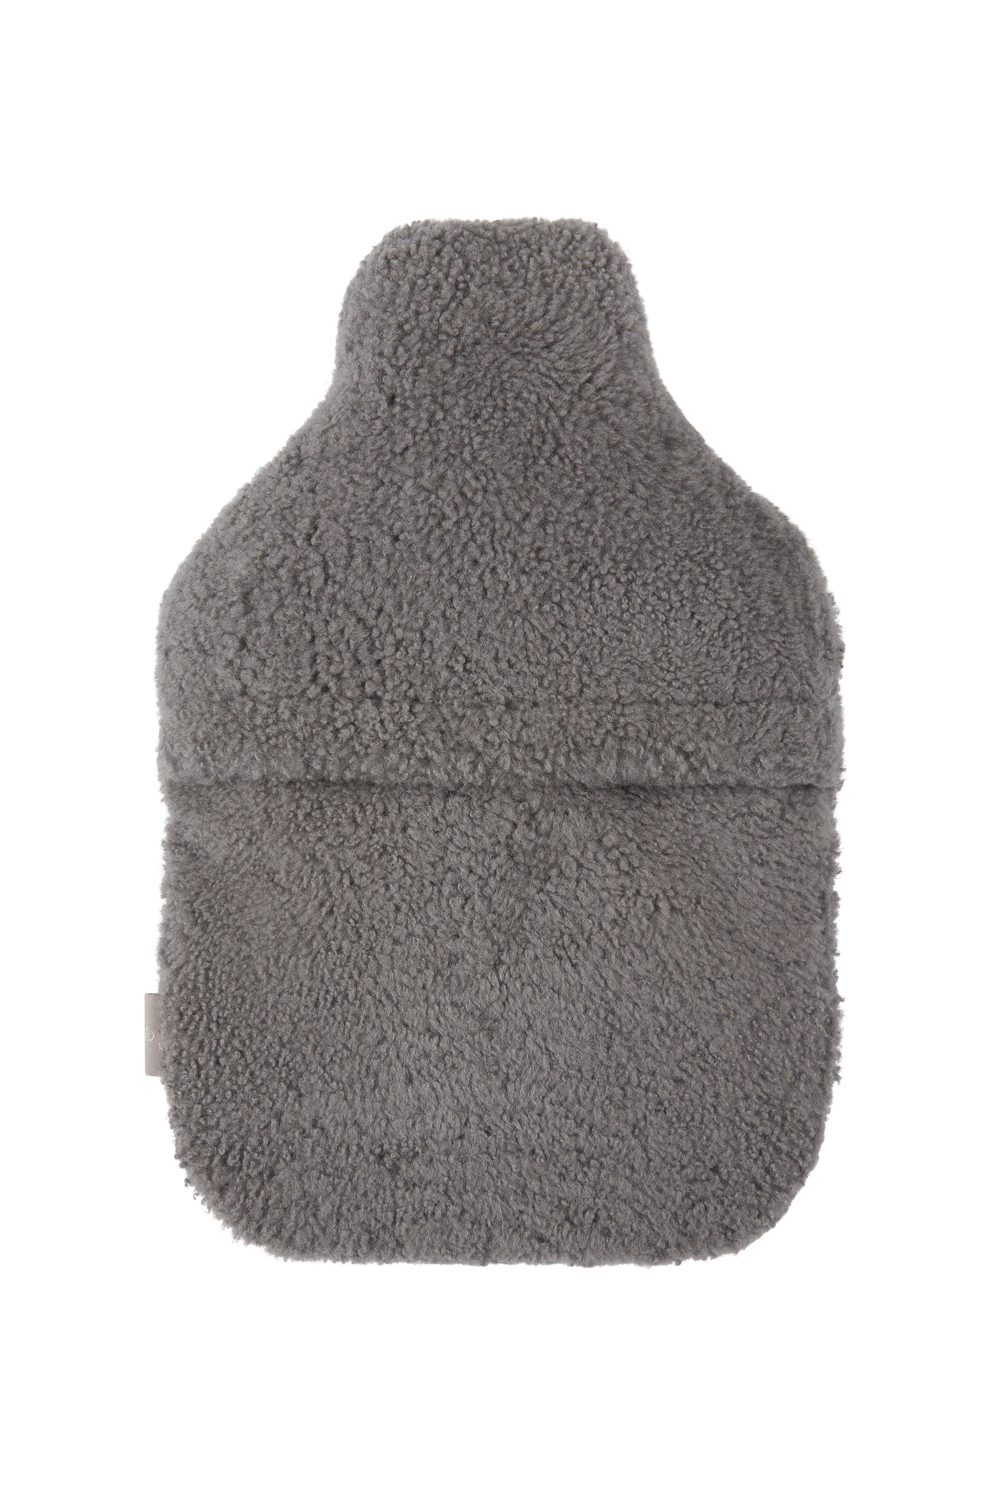 Grey Shearling Hot Water Bottle Cover | Homeware | Gushlow & Cole - back